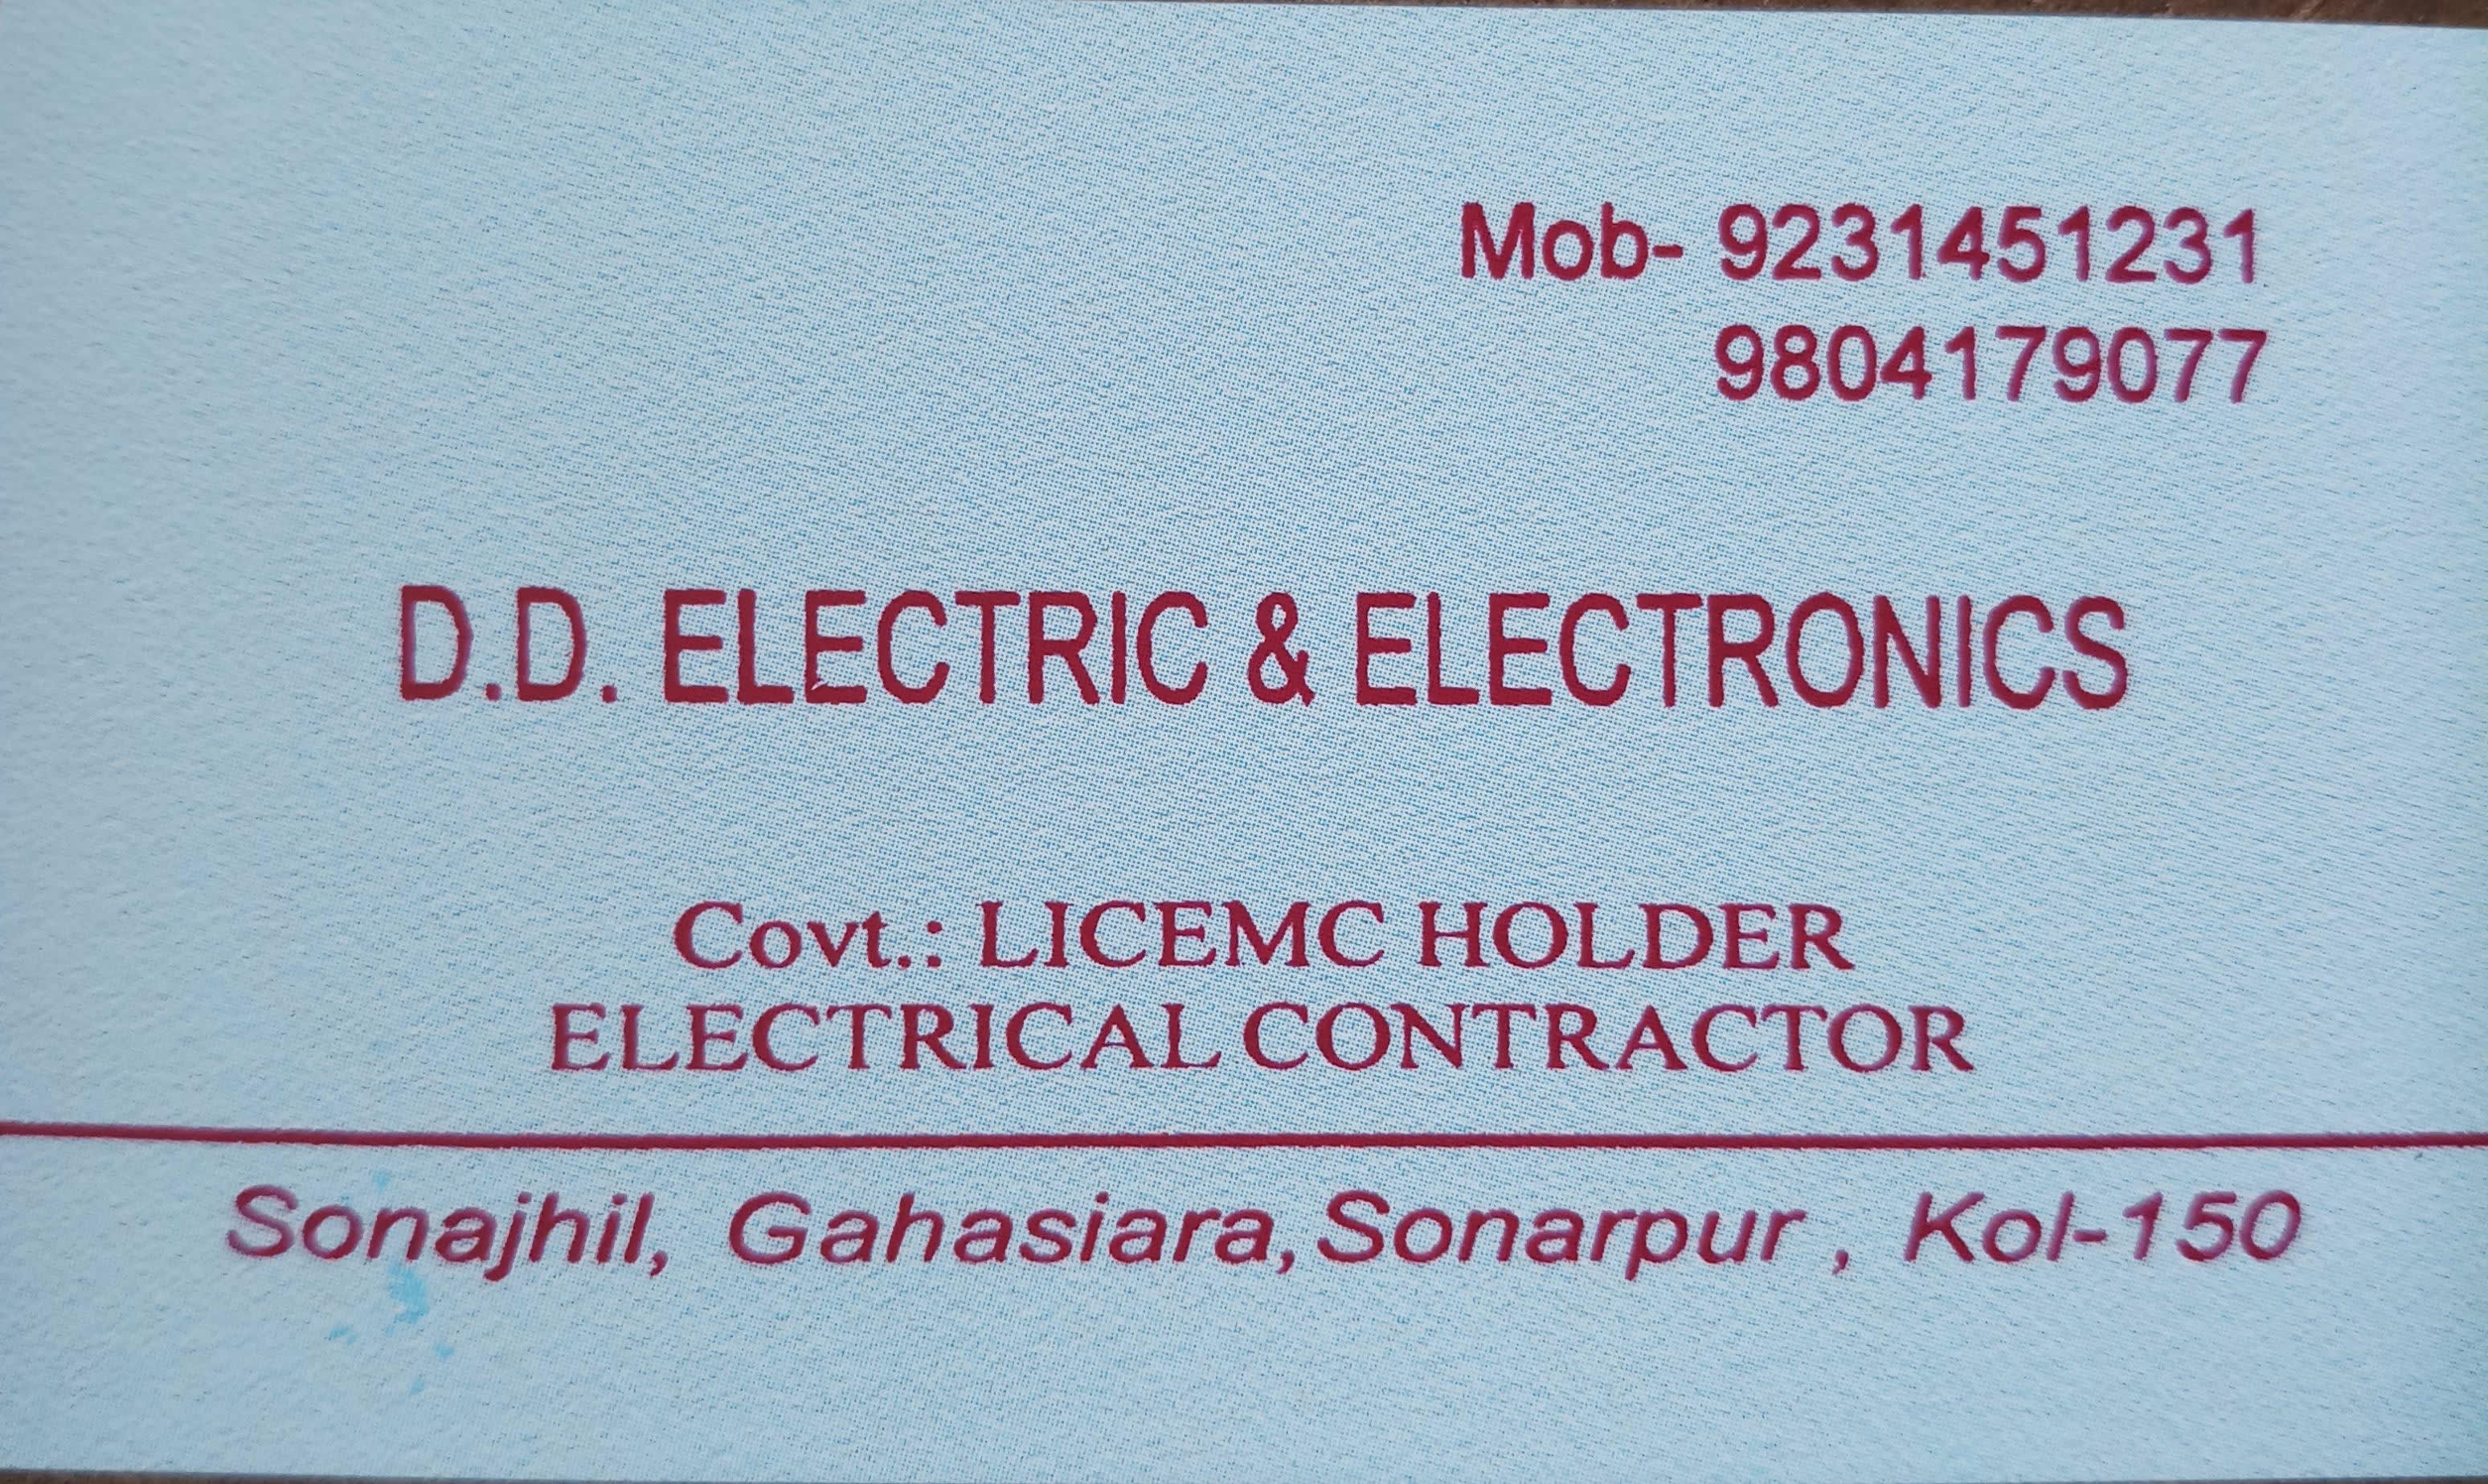 DD Electric & Electronics